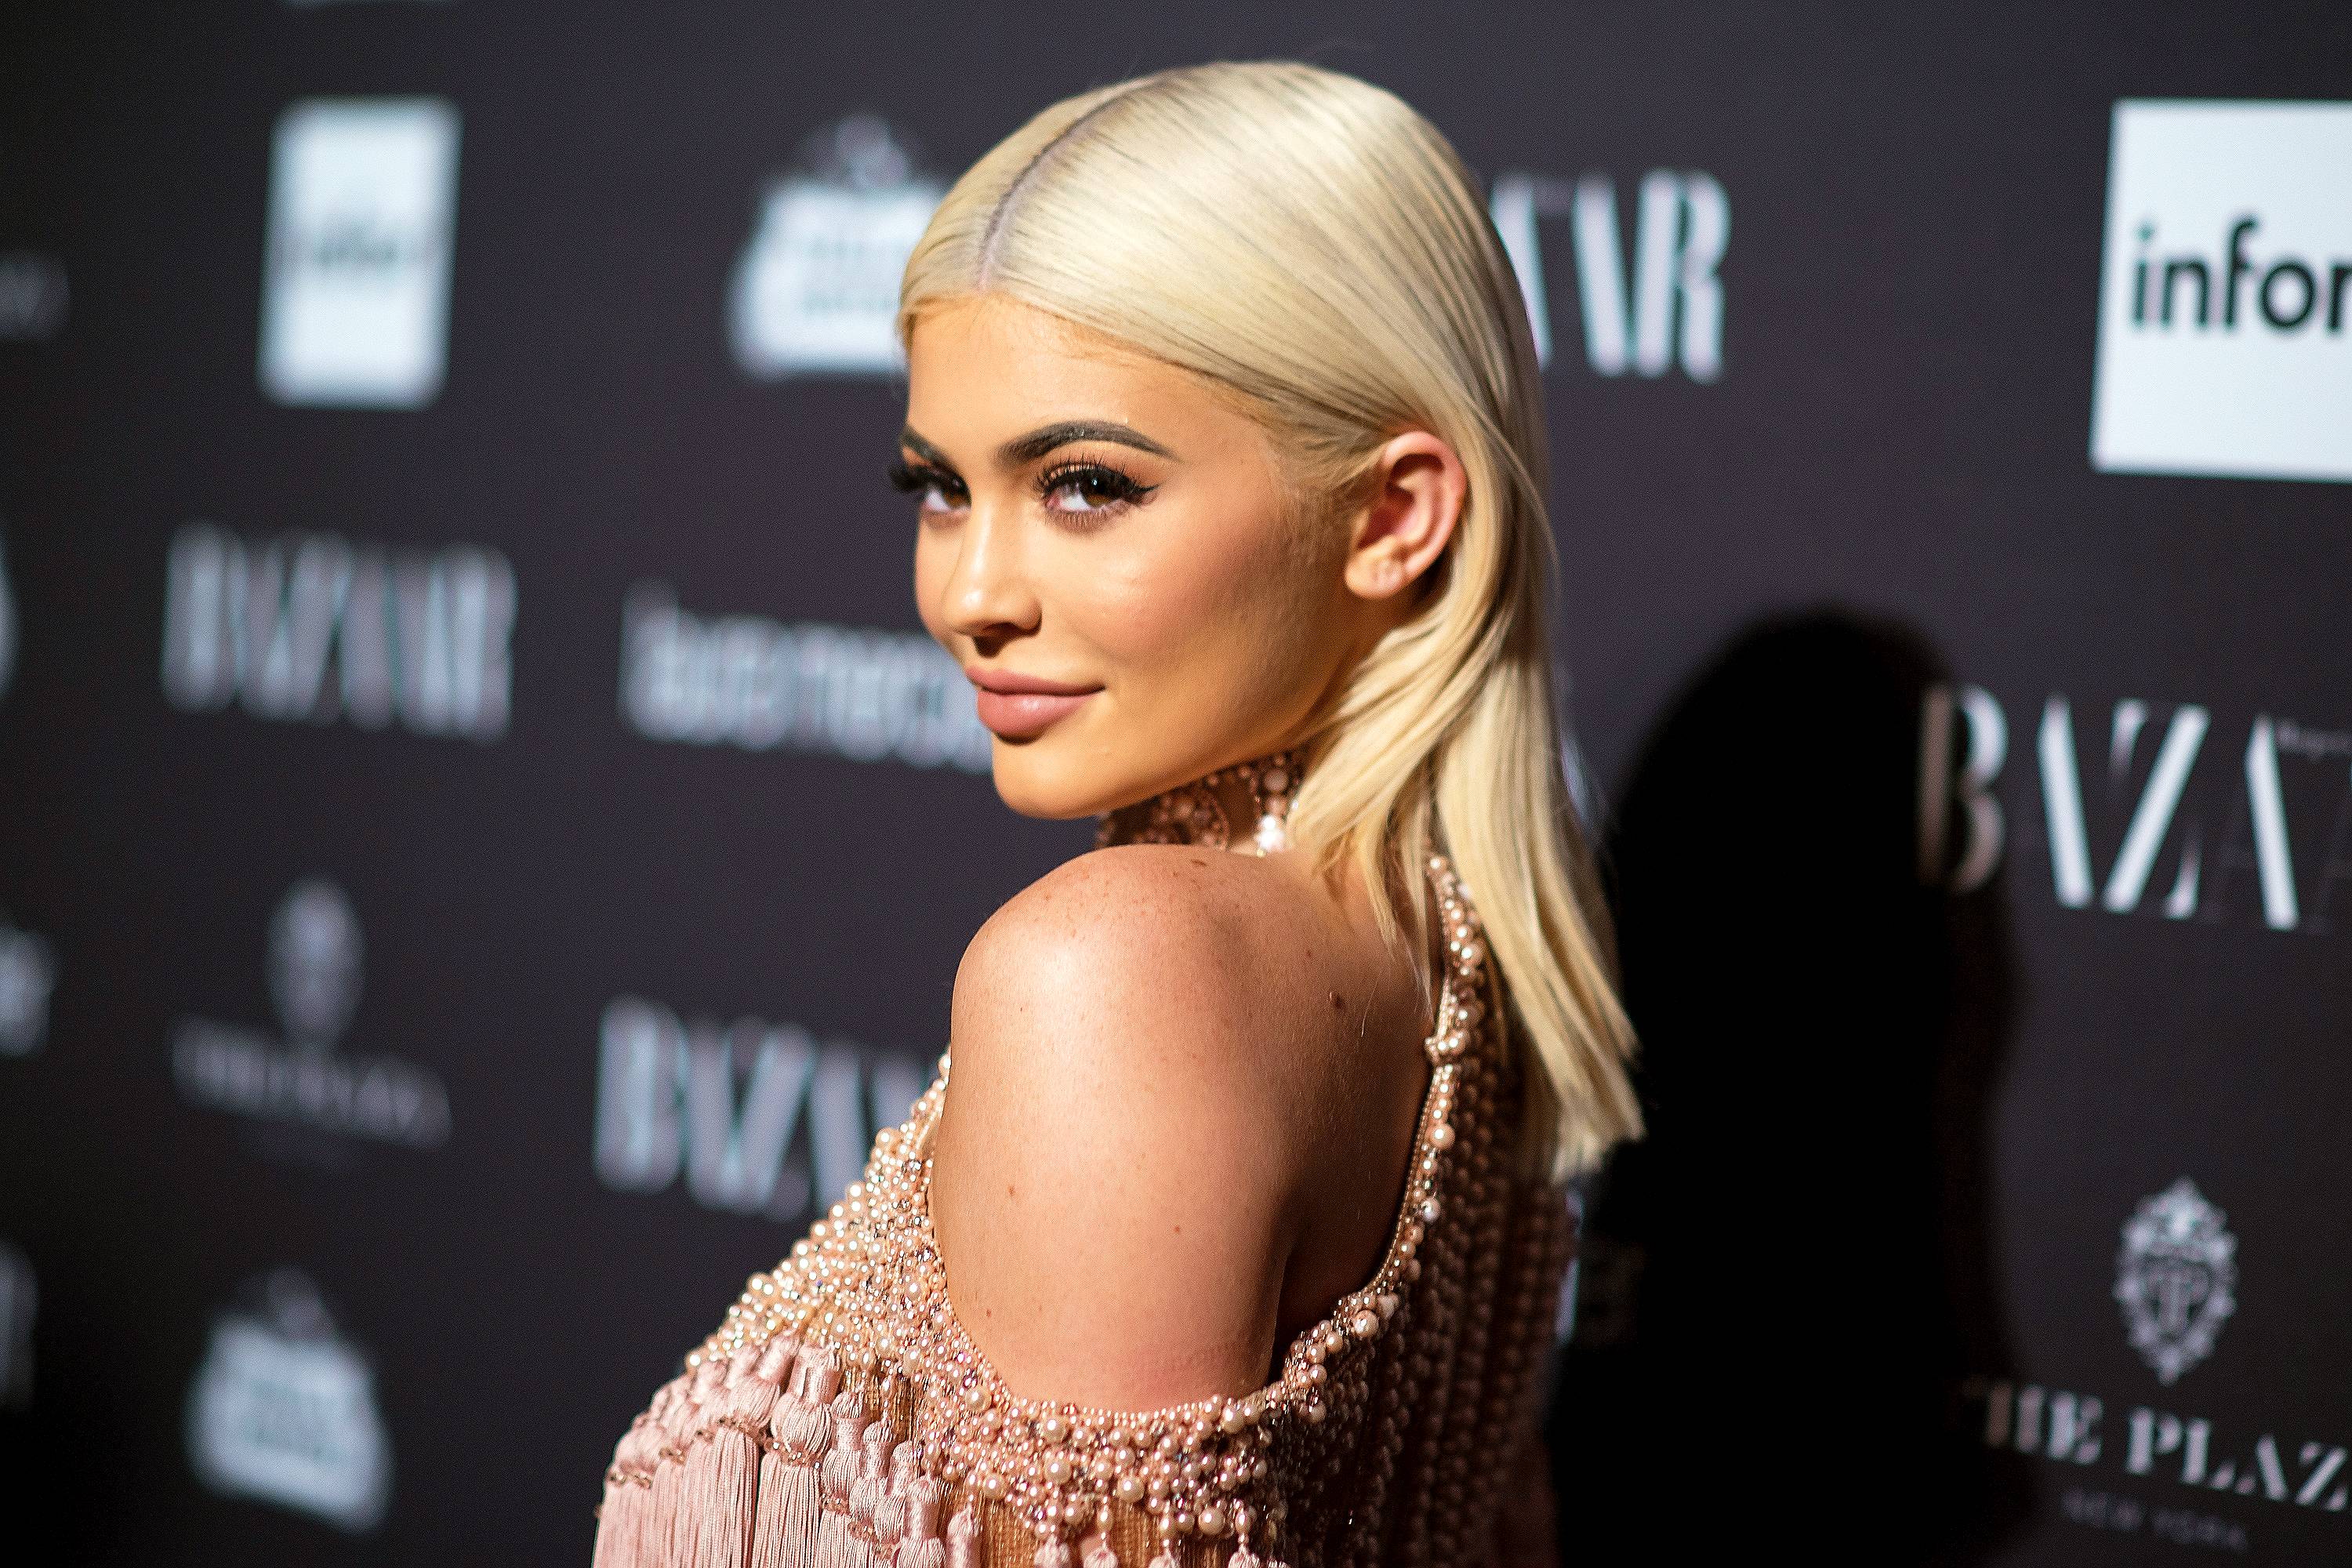 Kylie Jenner Made $420 Million Selling You Lipstick, News